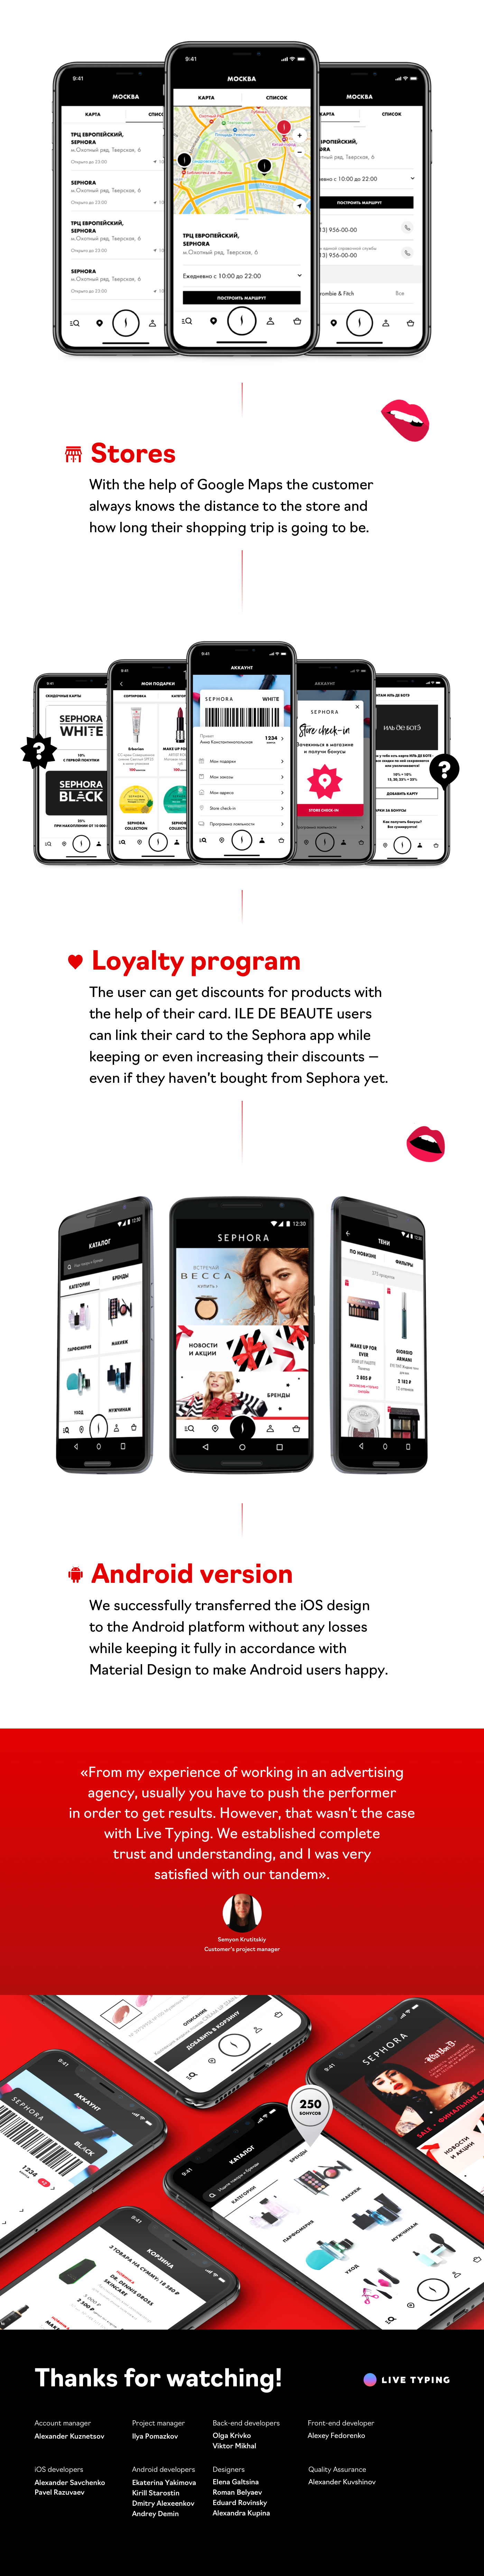 ux/ui app Prototyping ios android Interface Eccomerce beauty design amazing